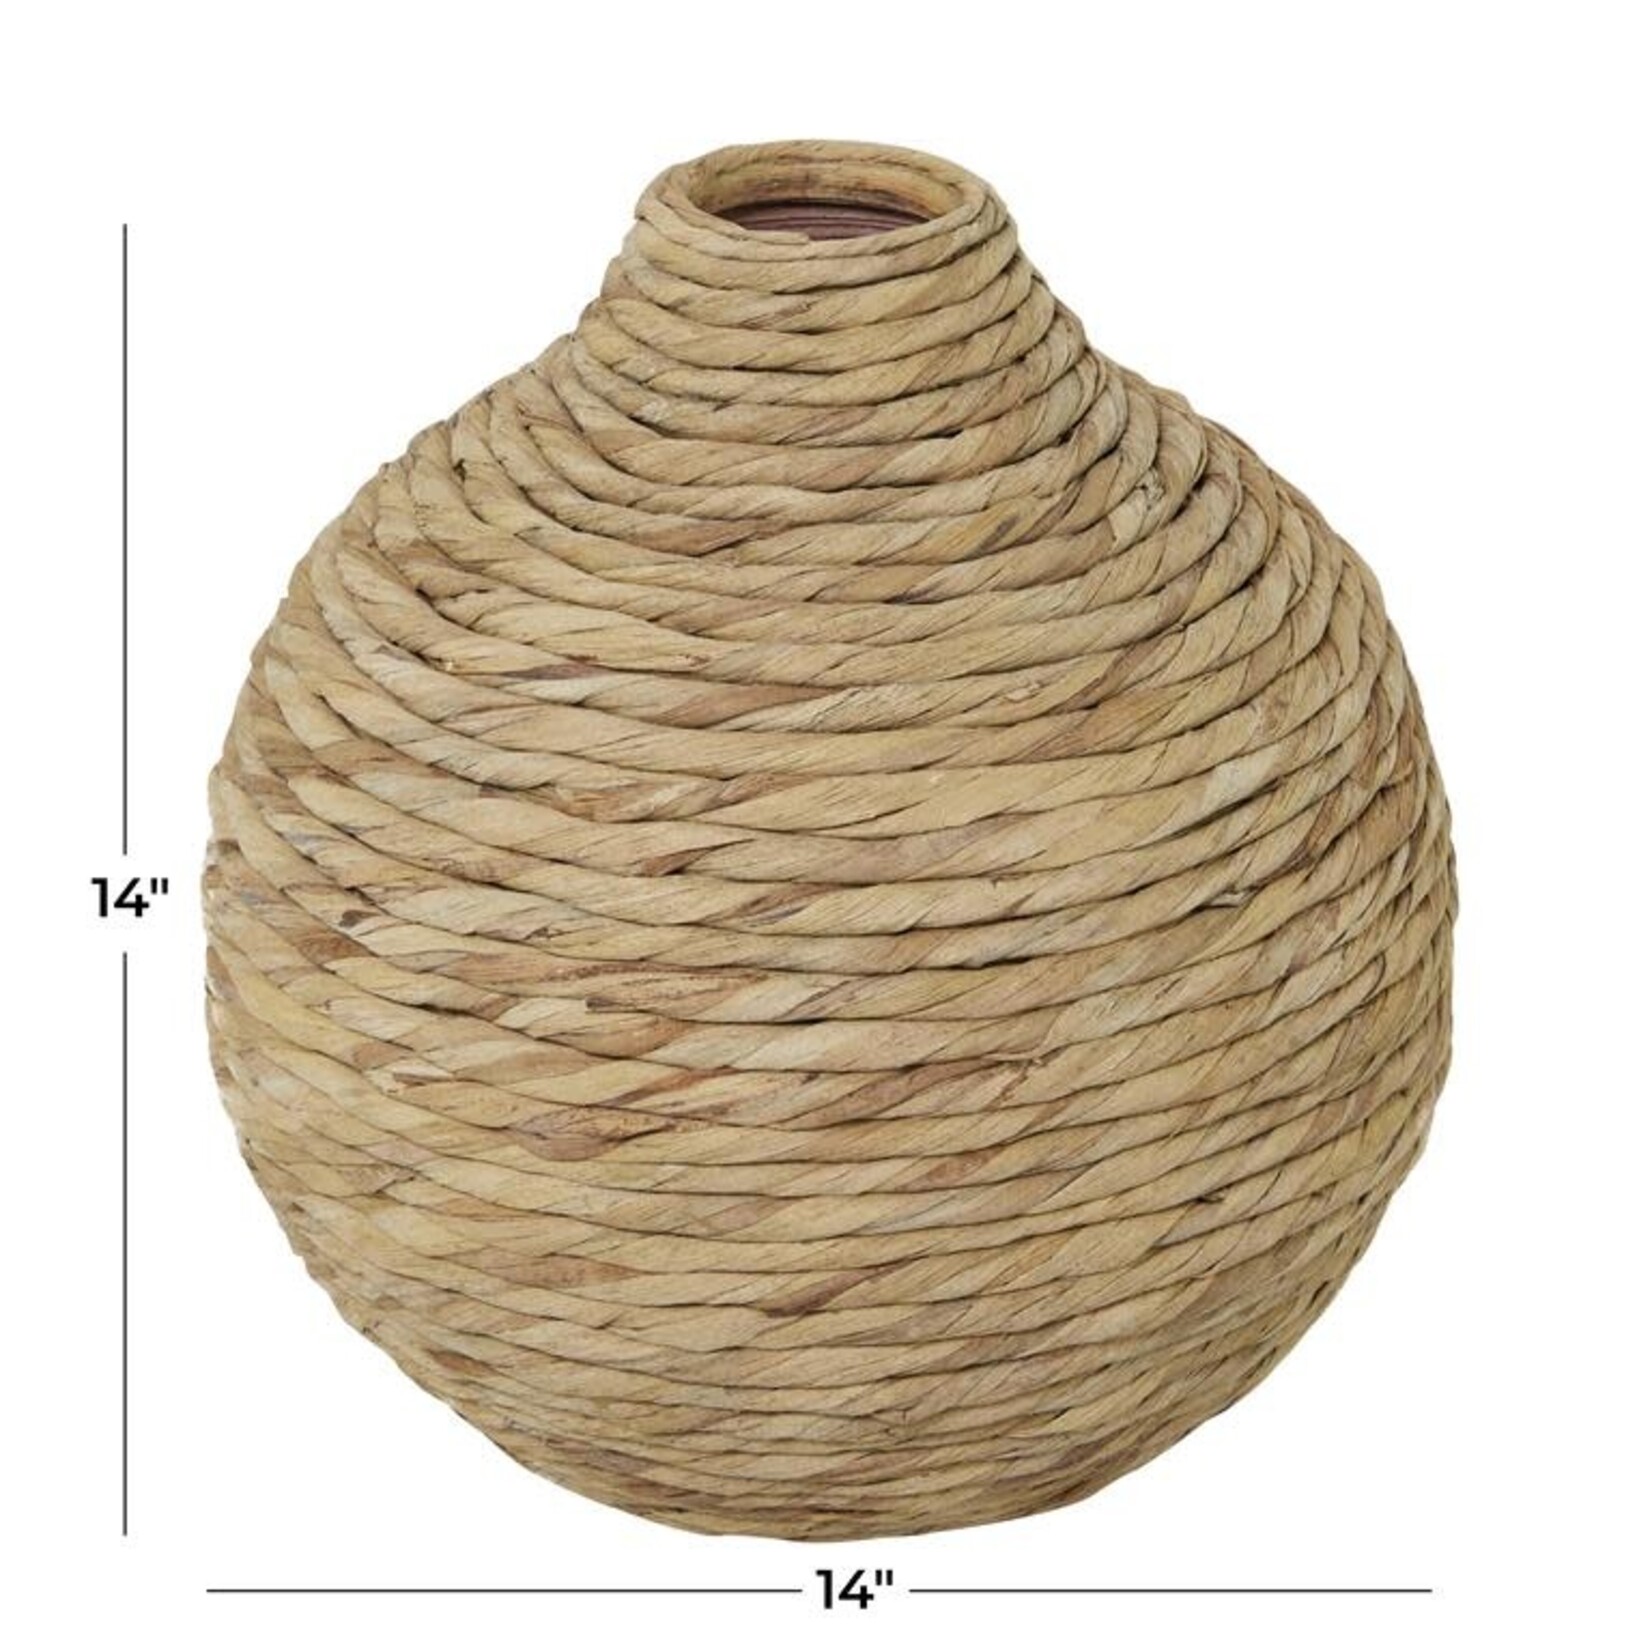 UMA Enterprises 85562 Brown Seagrass Handmade Woven Vase 14"x14"x14"